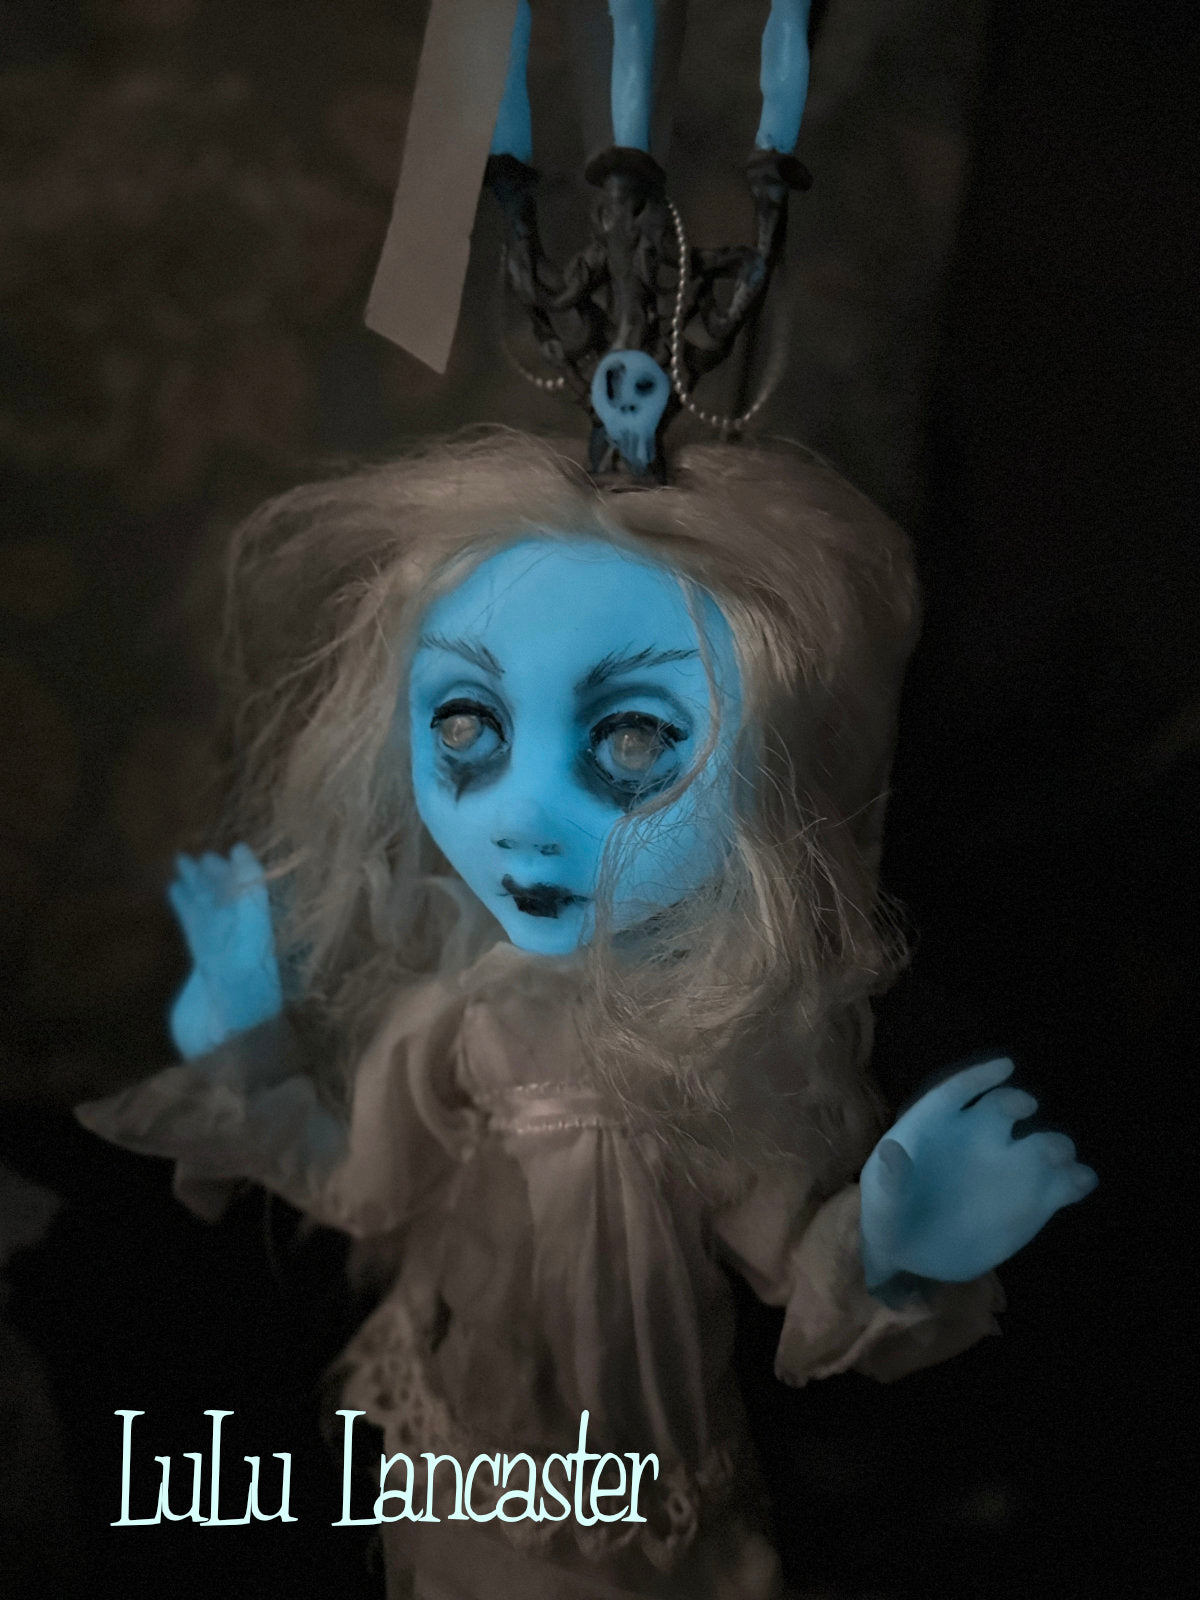 Carmen glow in the dark hanging ghost Original LuLu Lancaster Art Doll